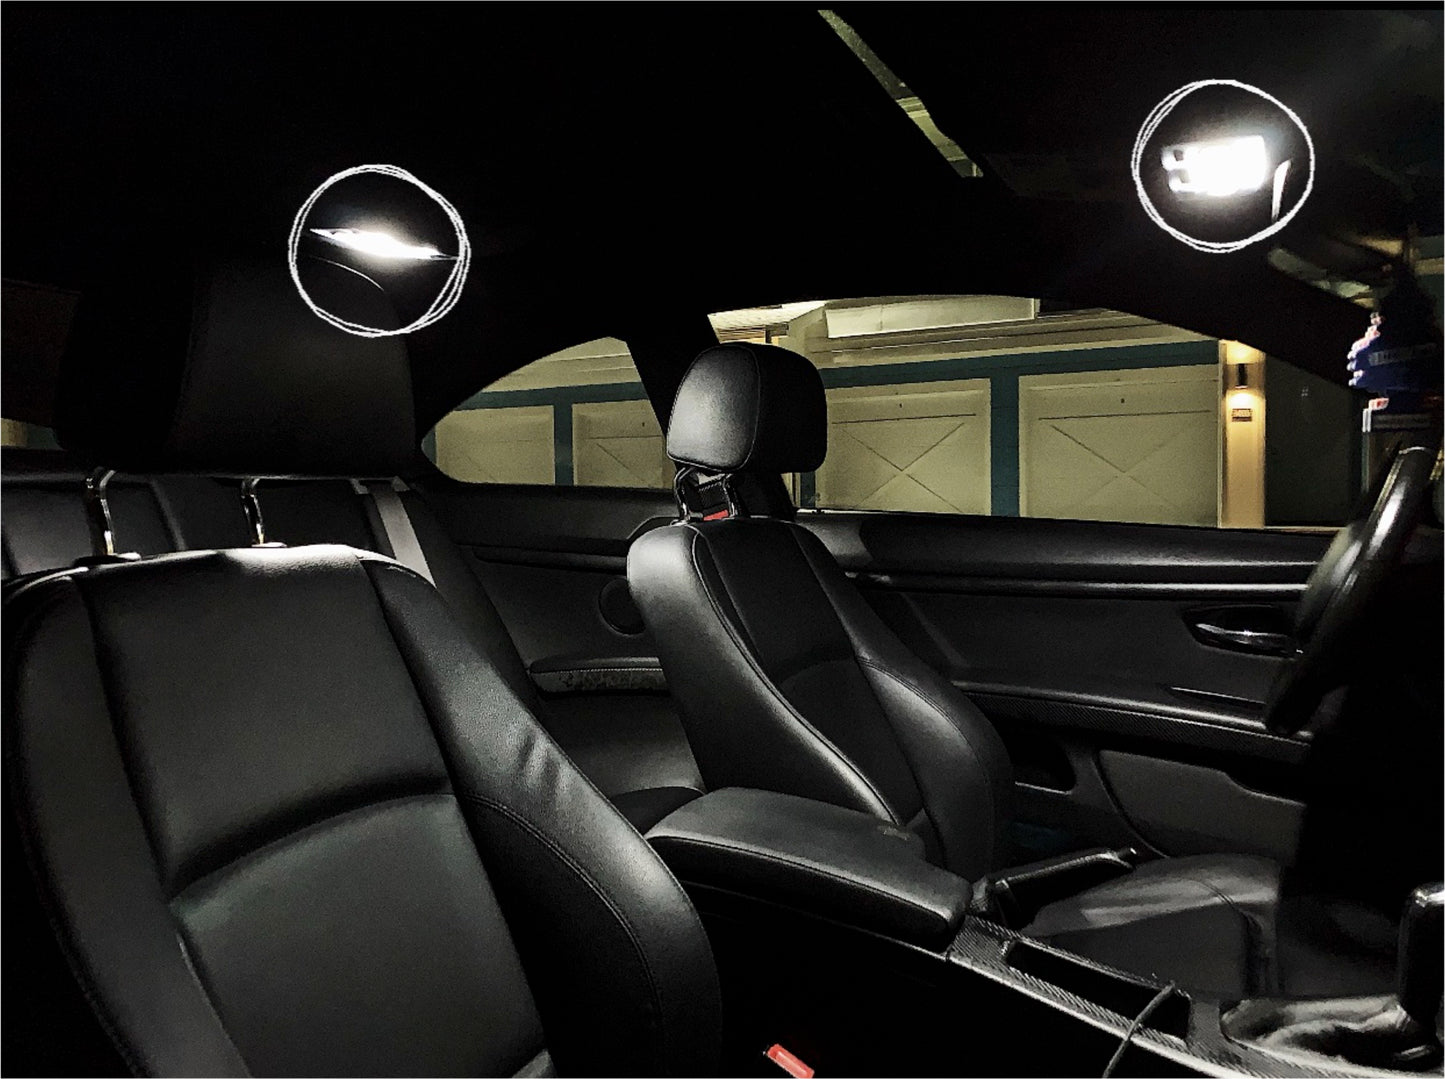 BMW E90 E92 Interior LED Light Kit 6000K White (CANBUS ERROR-FREE)